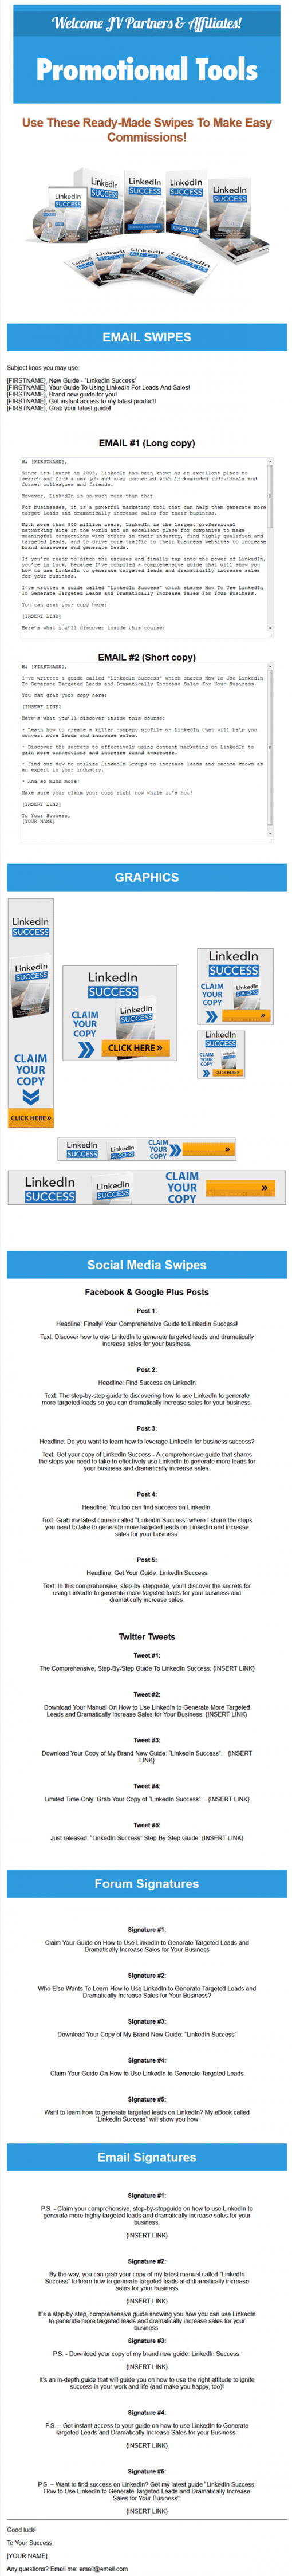 Linkedin Marketing Success Ebook and Videos MRR